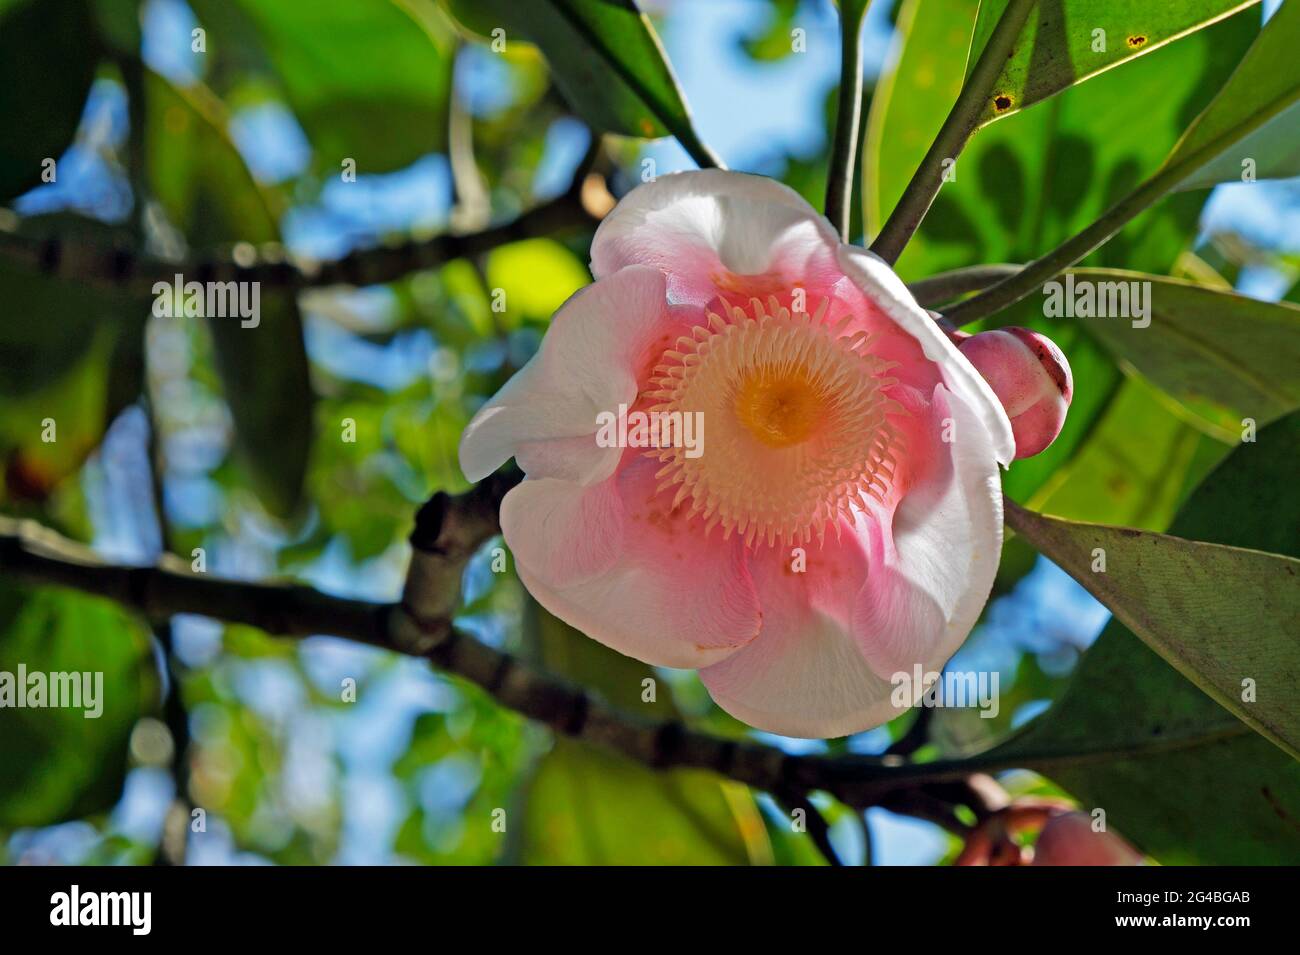 Clusia flower on tree (Clusia grandiflora) Stock Photo